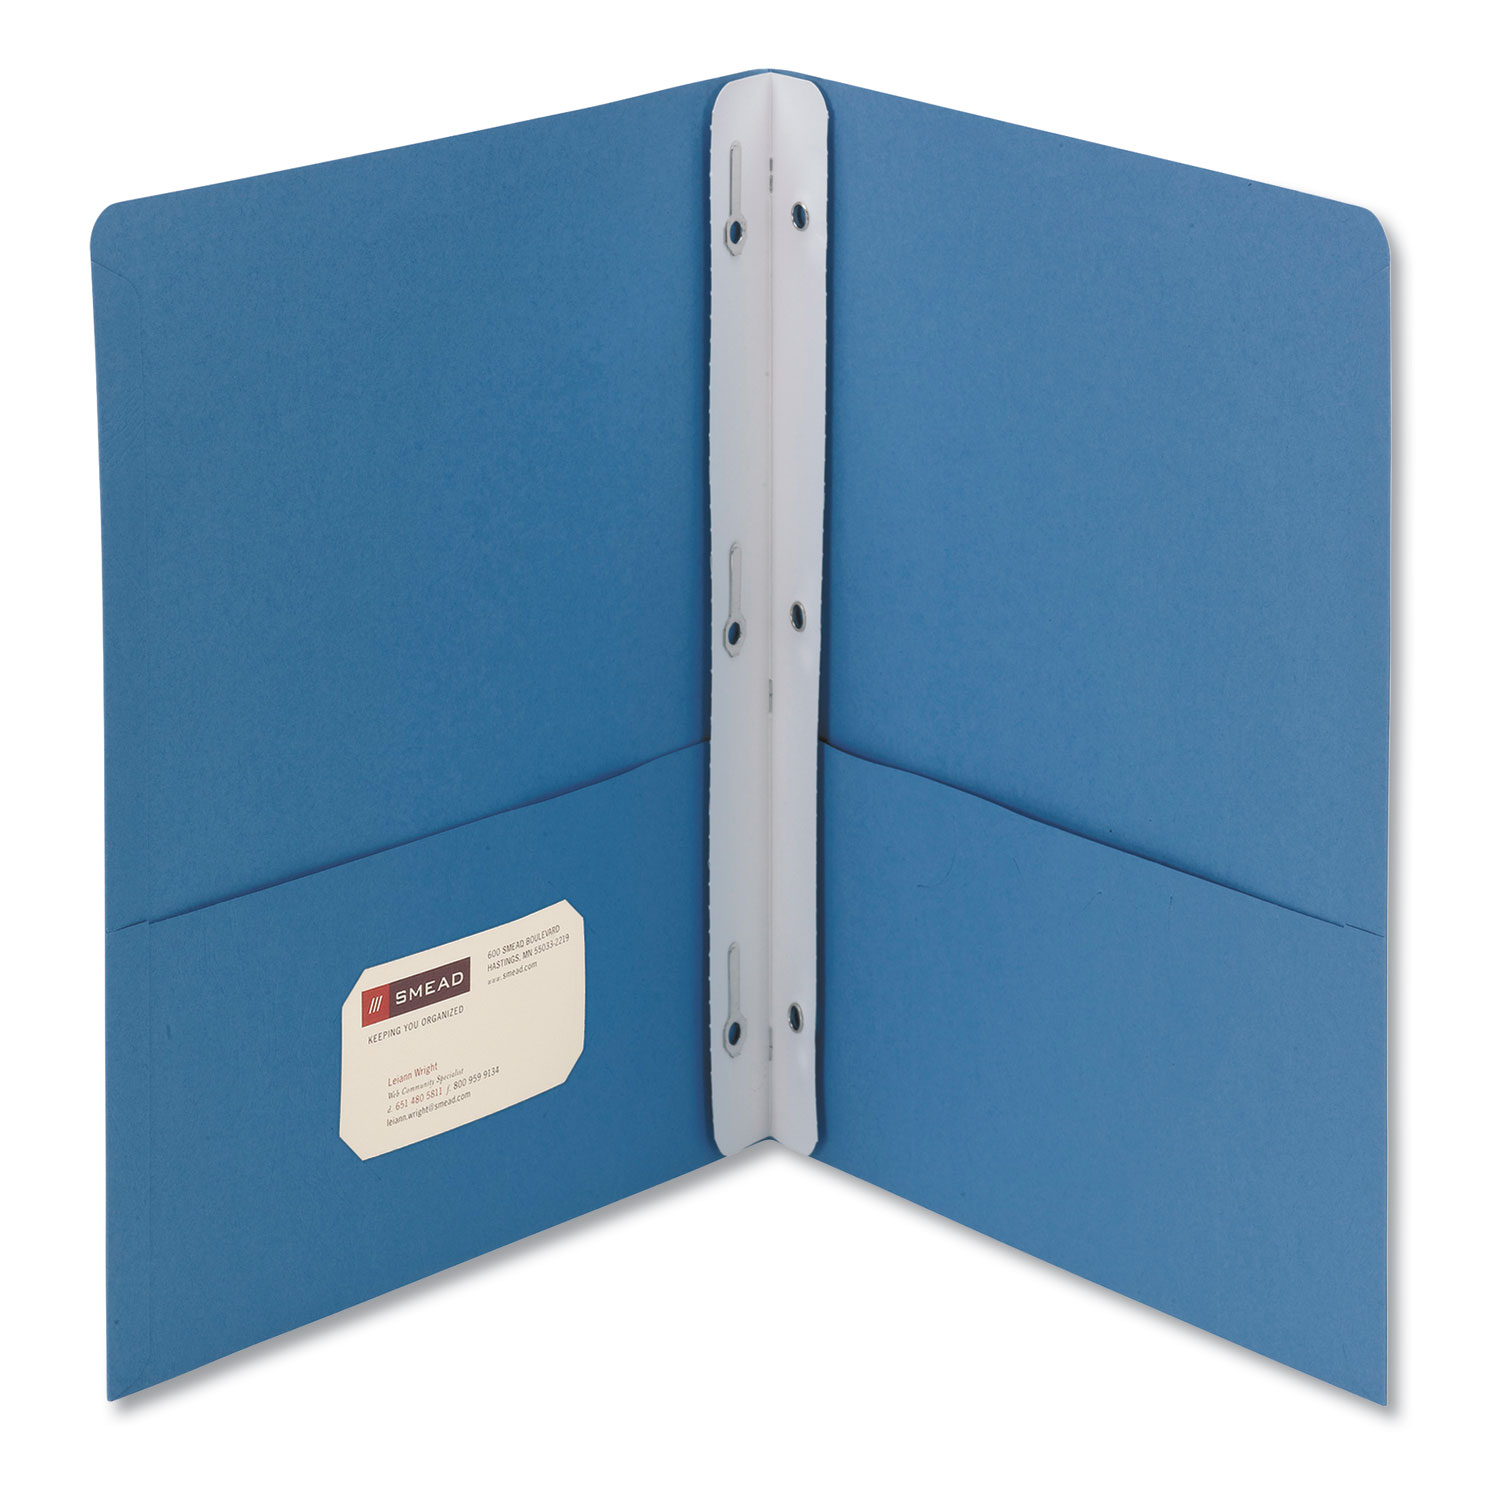 2 Pocket Plastic Folder With Prong Fasteners - Yoobi™ : Target